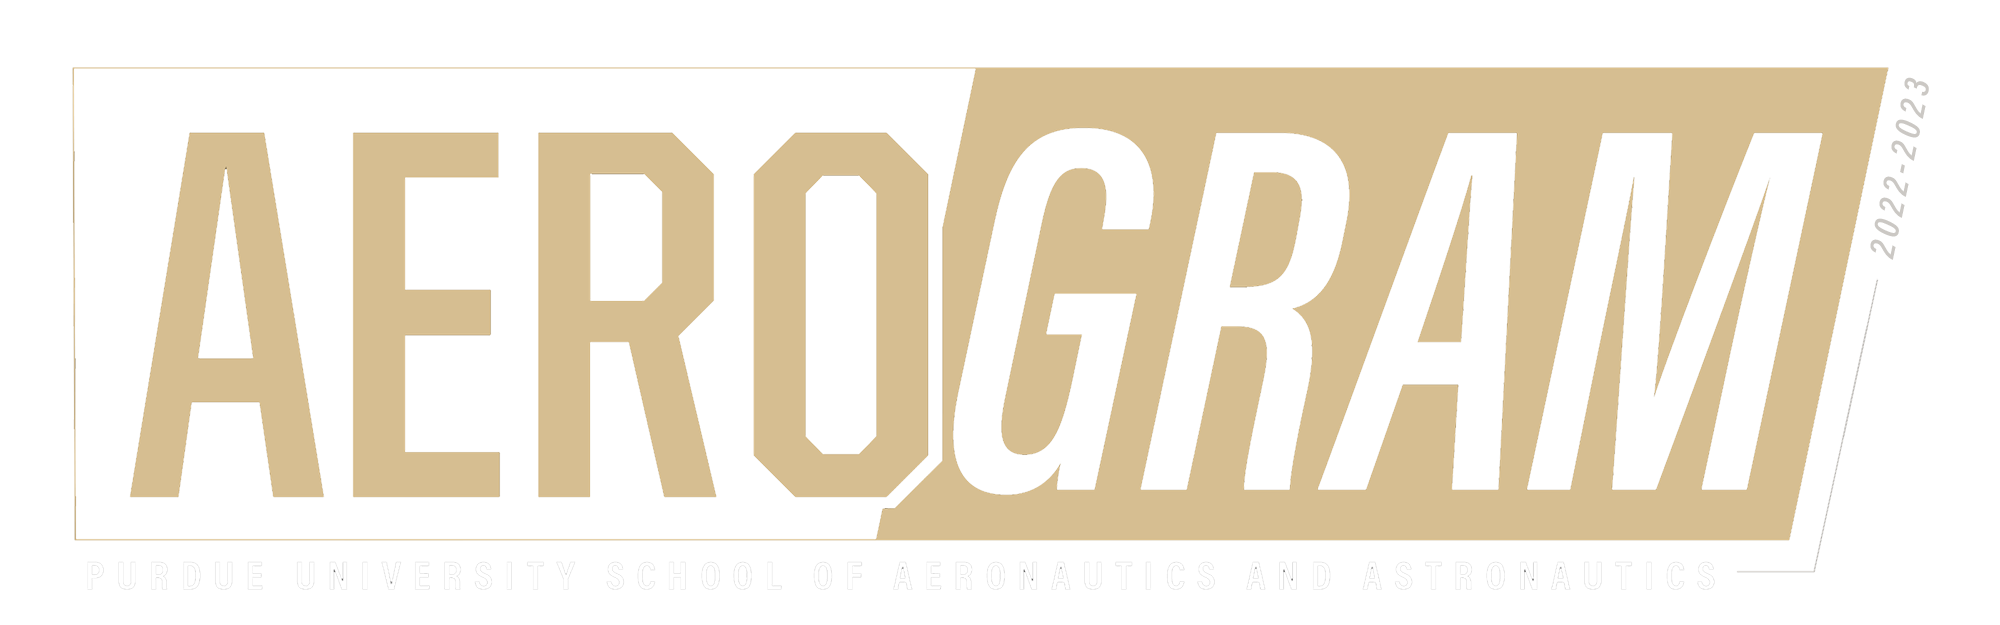 Online edition of the Aerogram magazine.